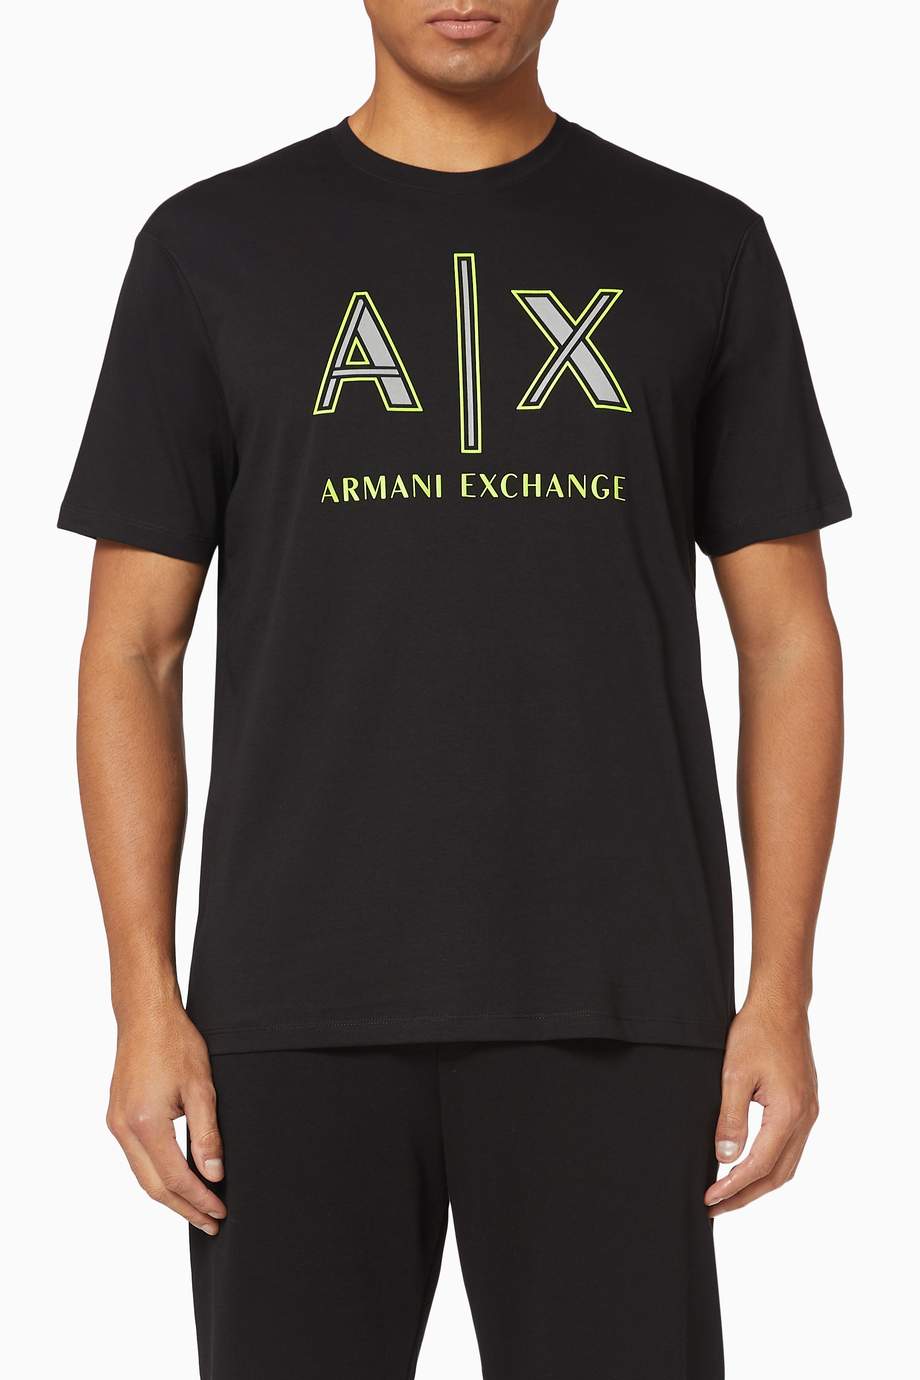 Shop Armani Exchange Black AX Neon Logo Jersey T-Shirt for Men | Ounass UAE